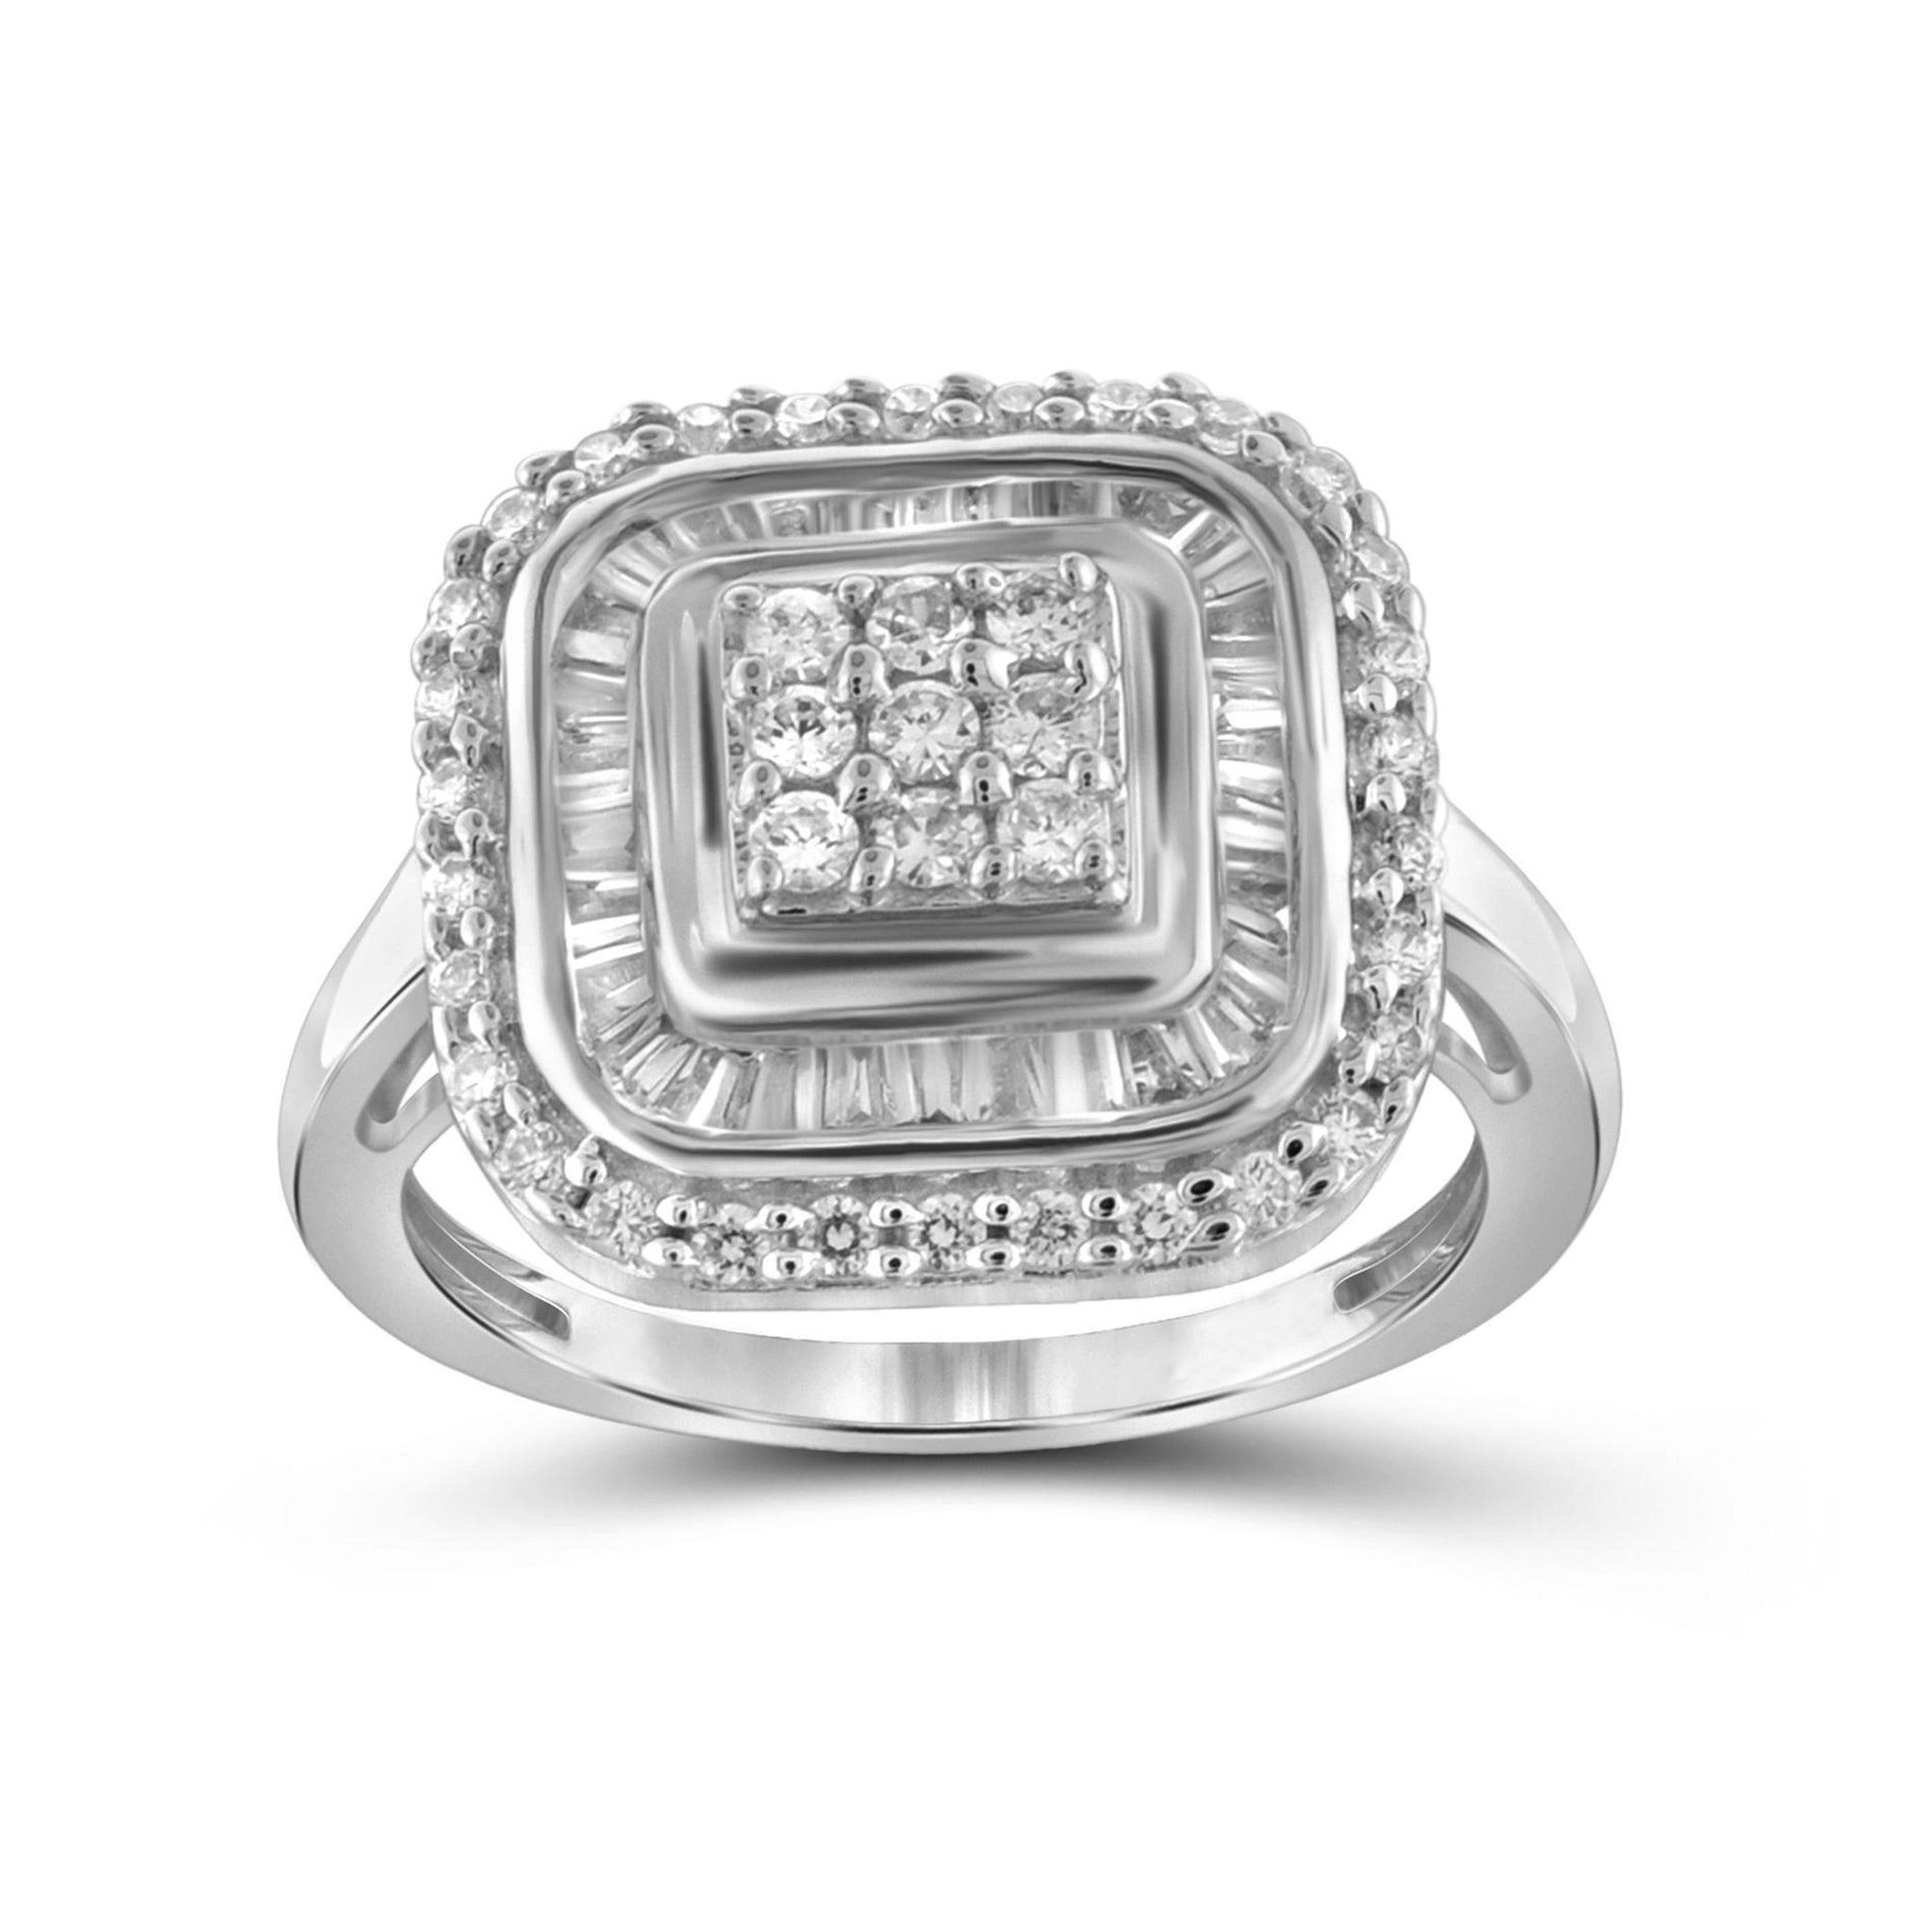 JewelonFire 1 Carat T.W. White Diamond Sterling Silver Cushion Cut Dual Square Ring